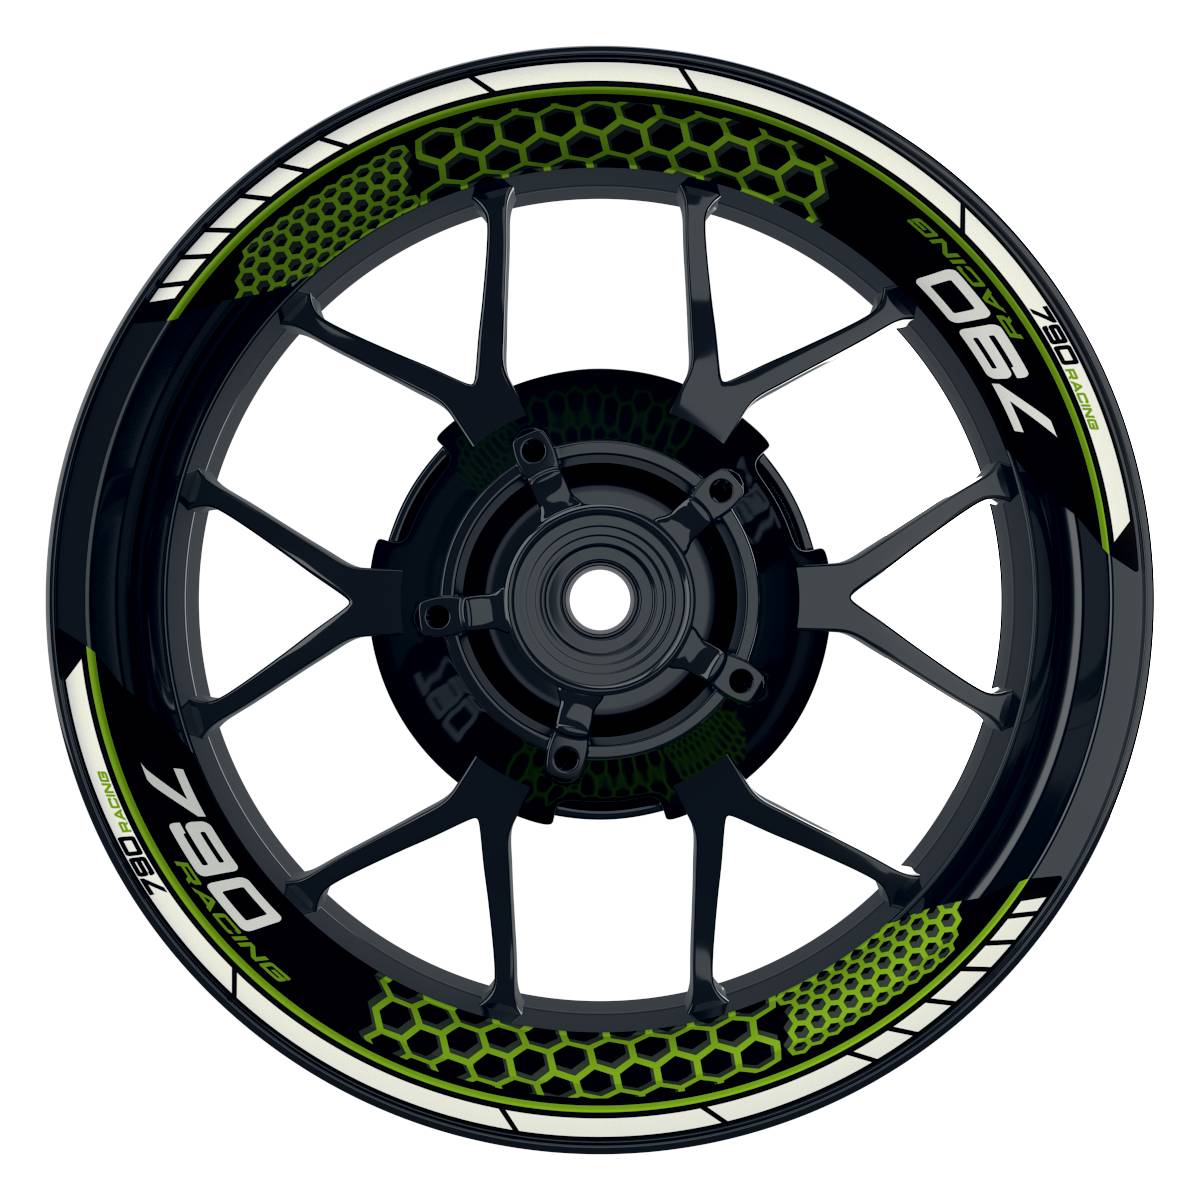 KTM Racing 790 Hexagon schwarz gruen Frontansicht